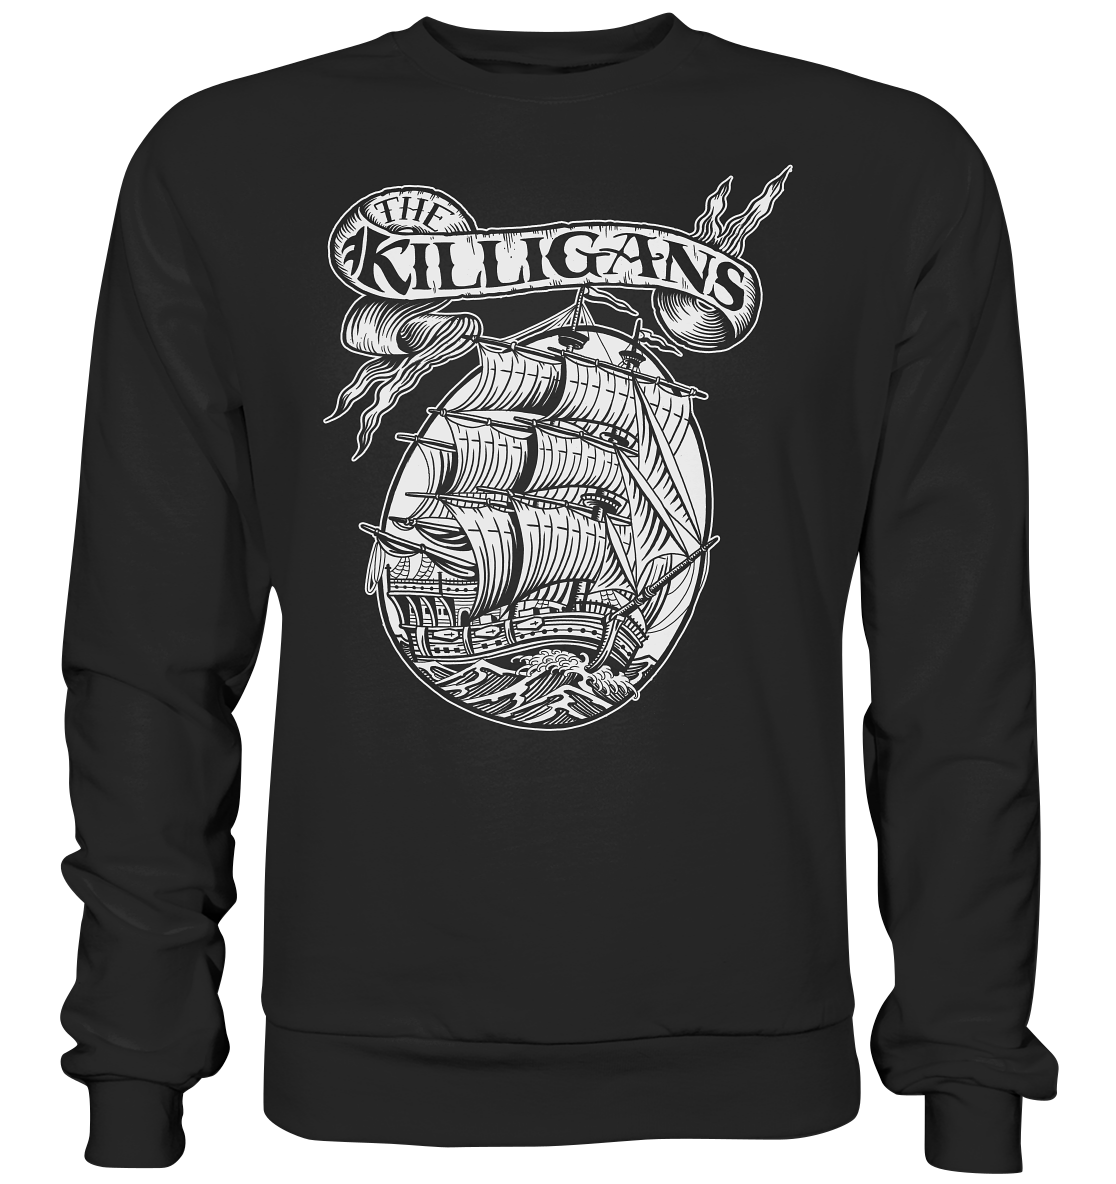 The Killigans "Ship" - Premium Sweatshirt